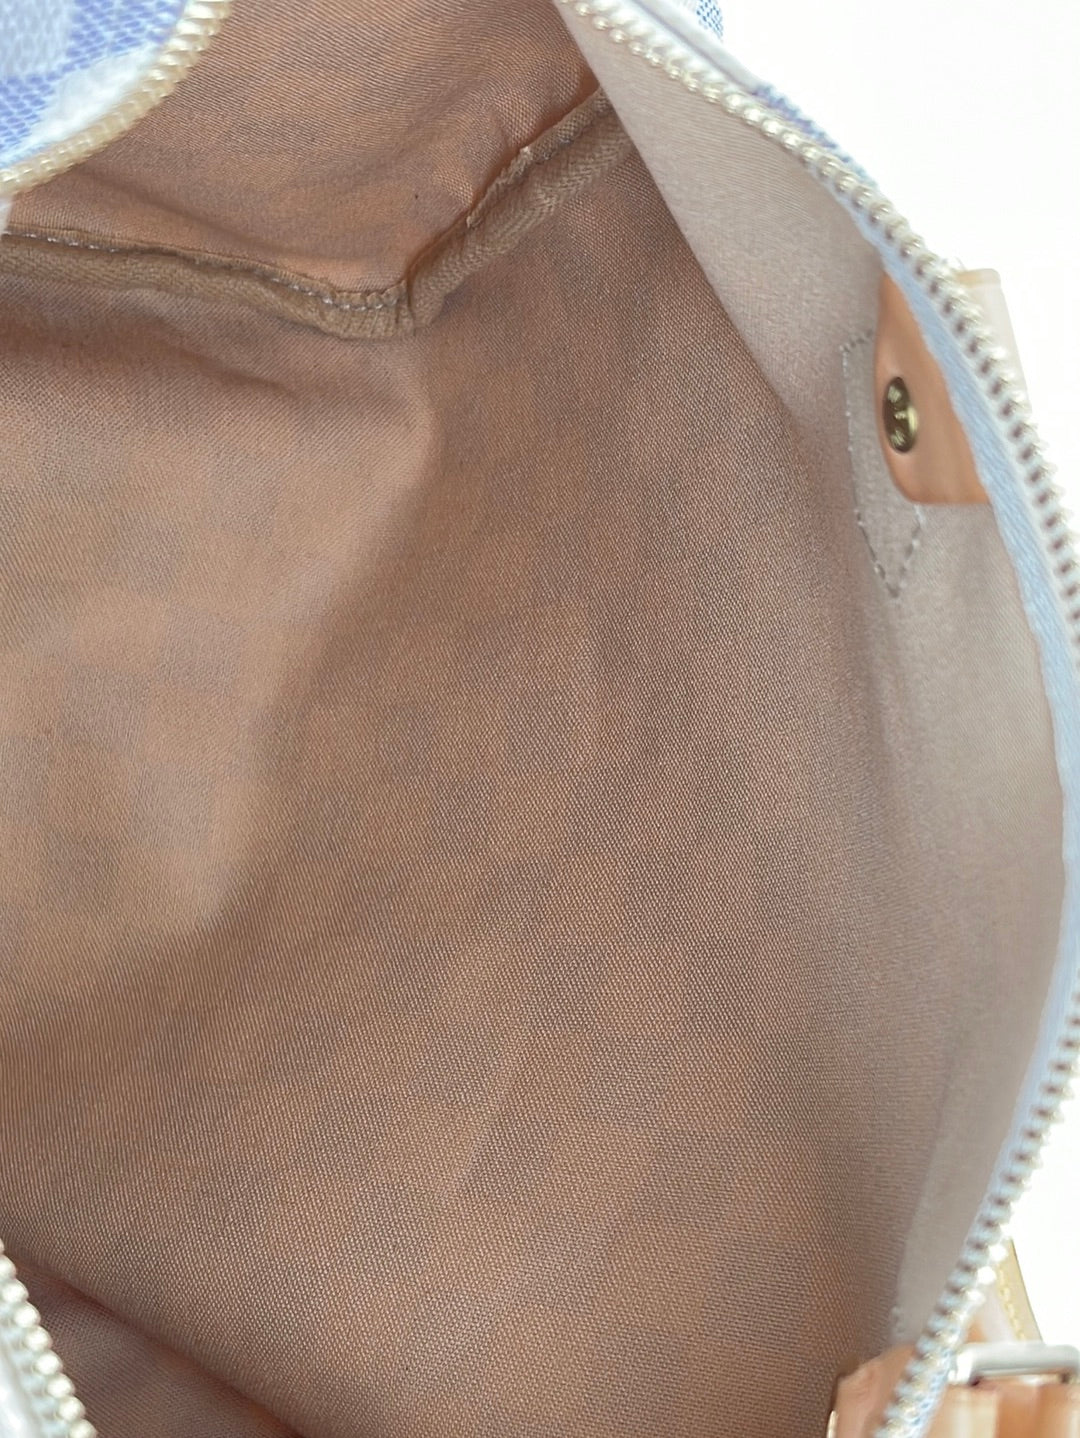 Louis Vuitton Damier Azur Speedy 30 Doctor Bag – I MISS YOU VINTAGE